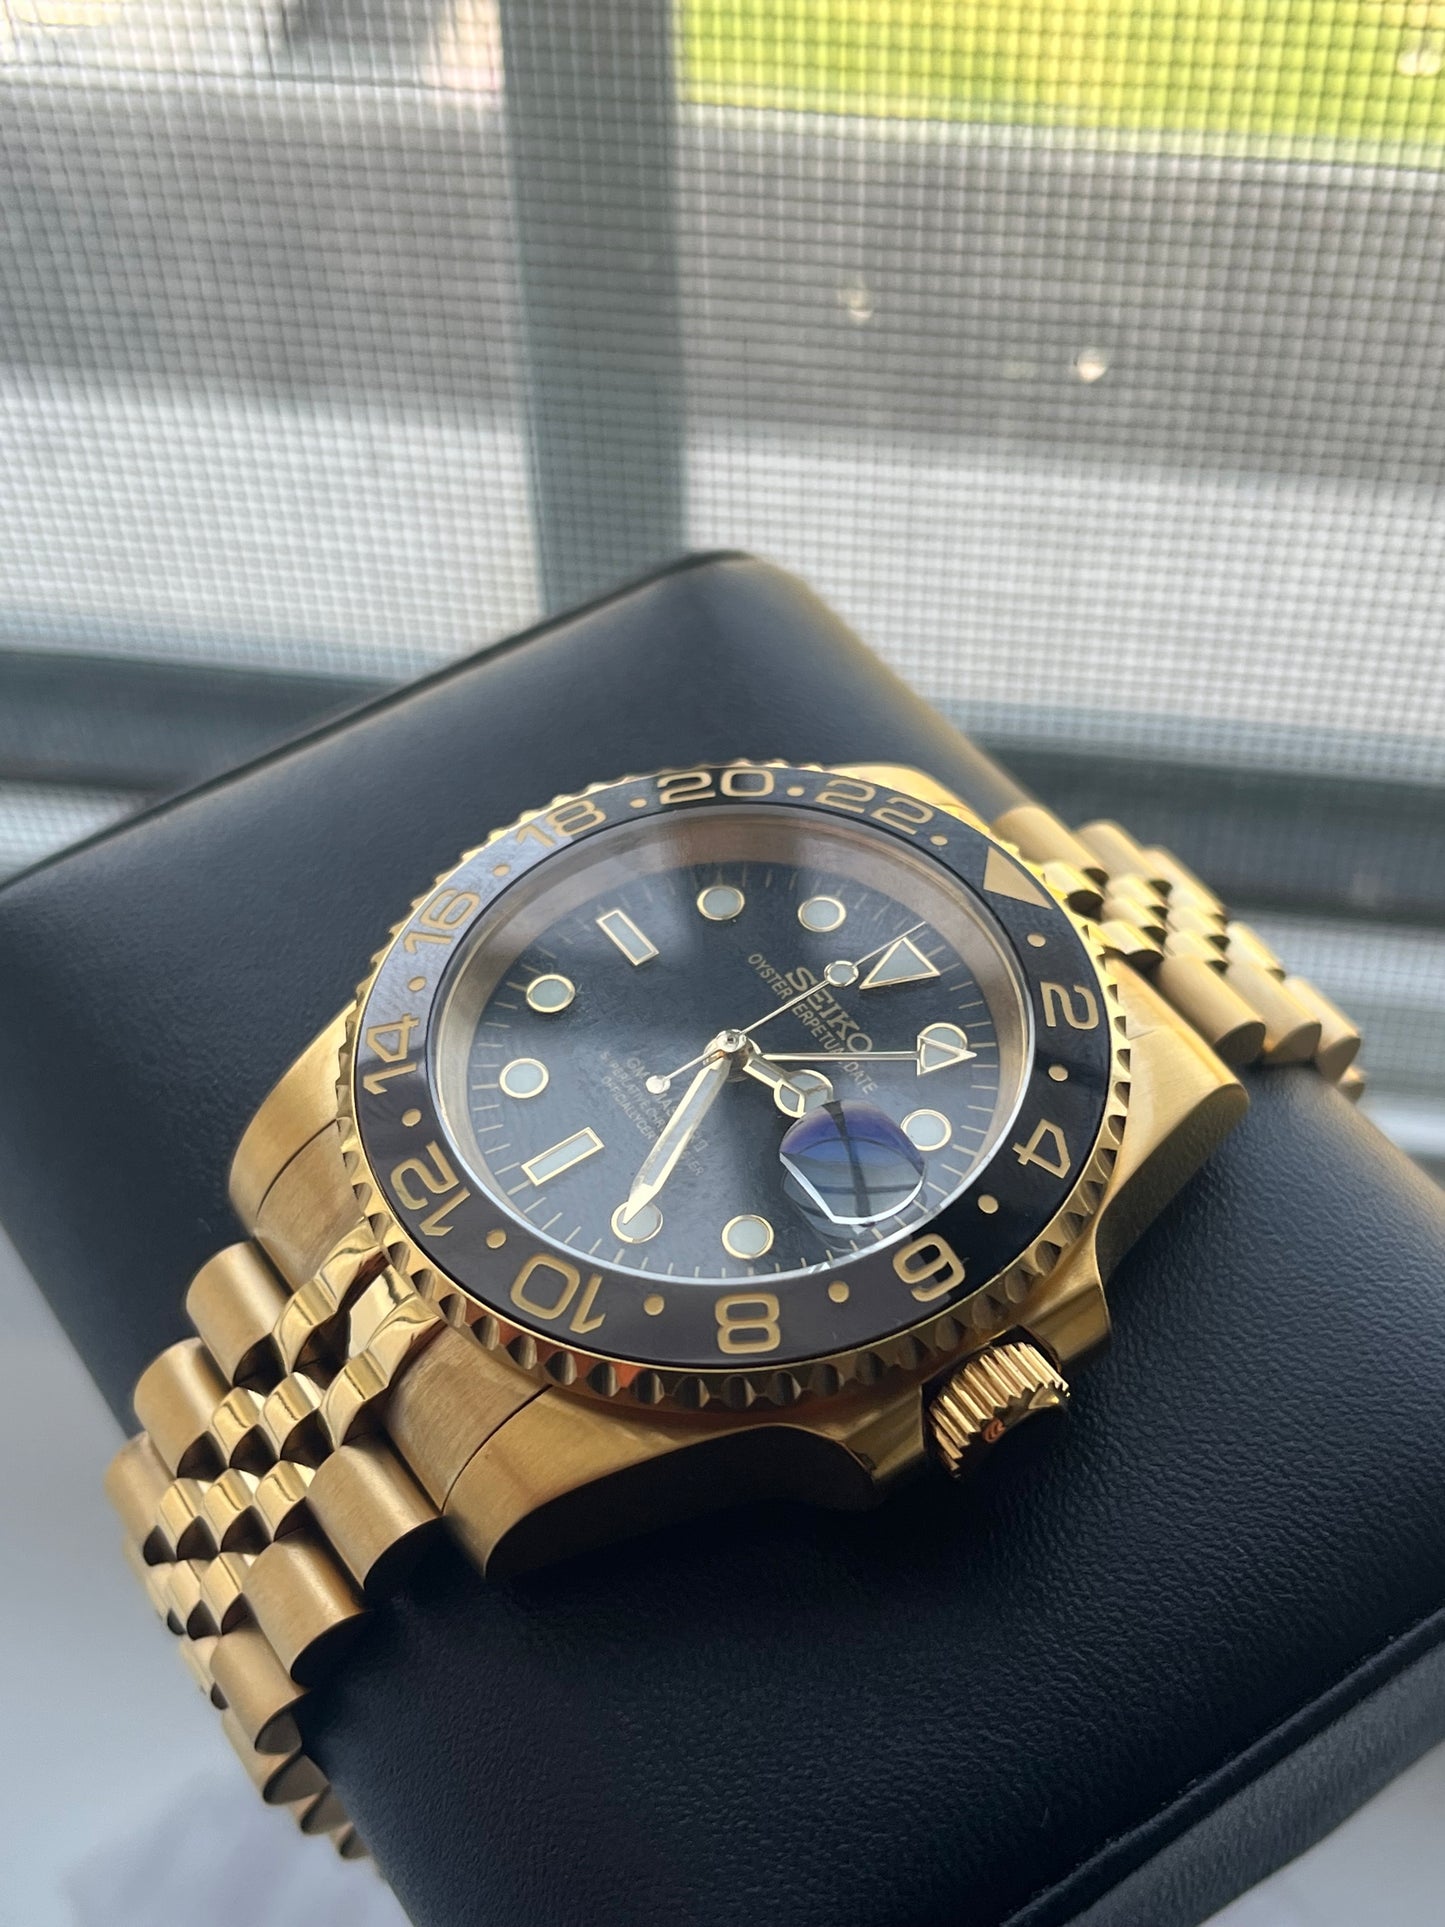 Custom build seiko mod GMT full gold jubilee automatic watch